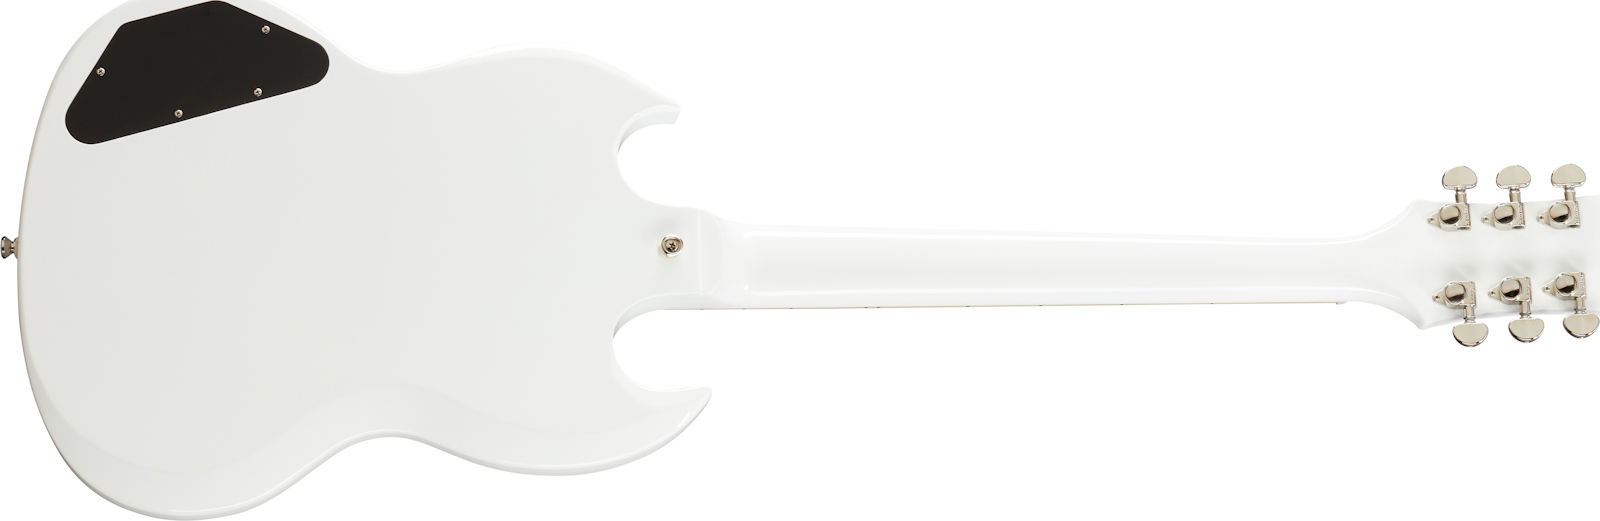 Epiphone Sg Standard 2h Ht Lau - Alpine White - Double cut electric guitar - Variation 1